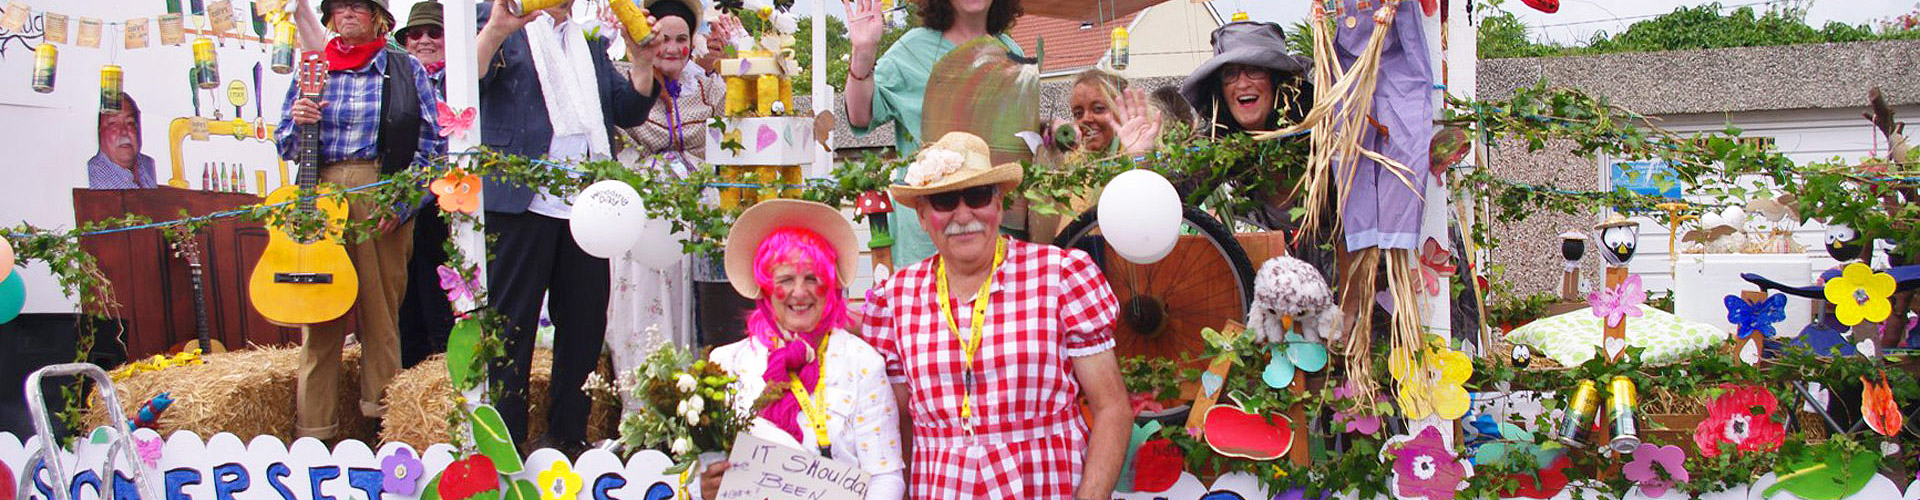 Group of people in fancy dress at Watchet Carnival